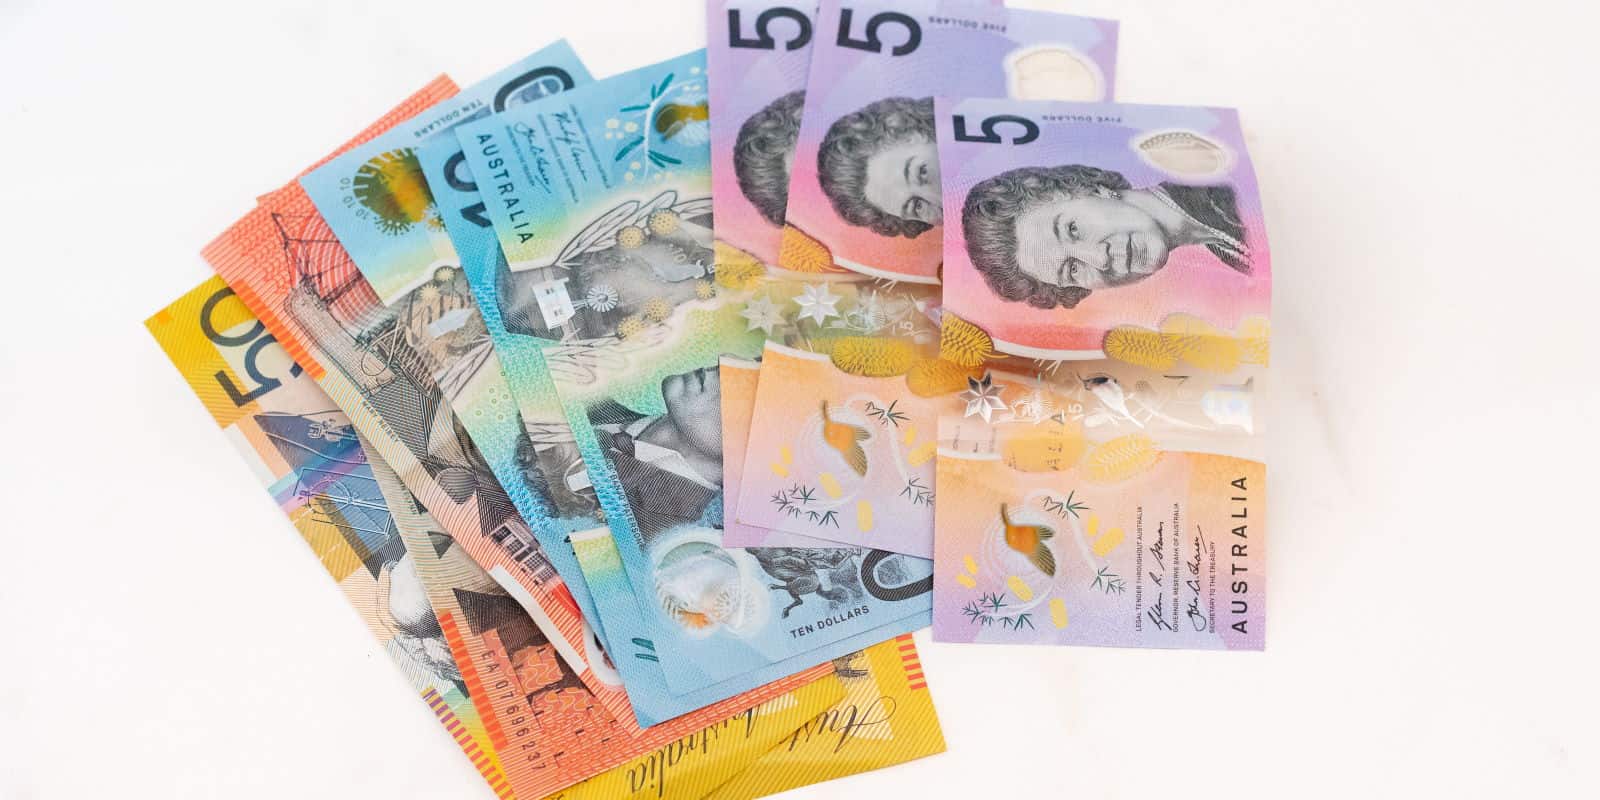 A spread of Australian bank notes